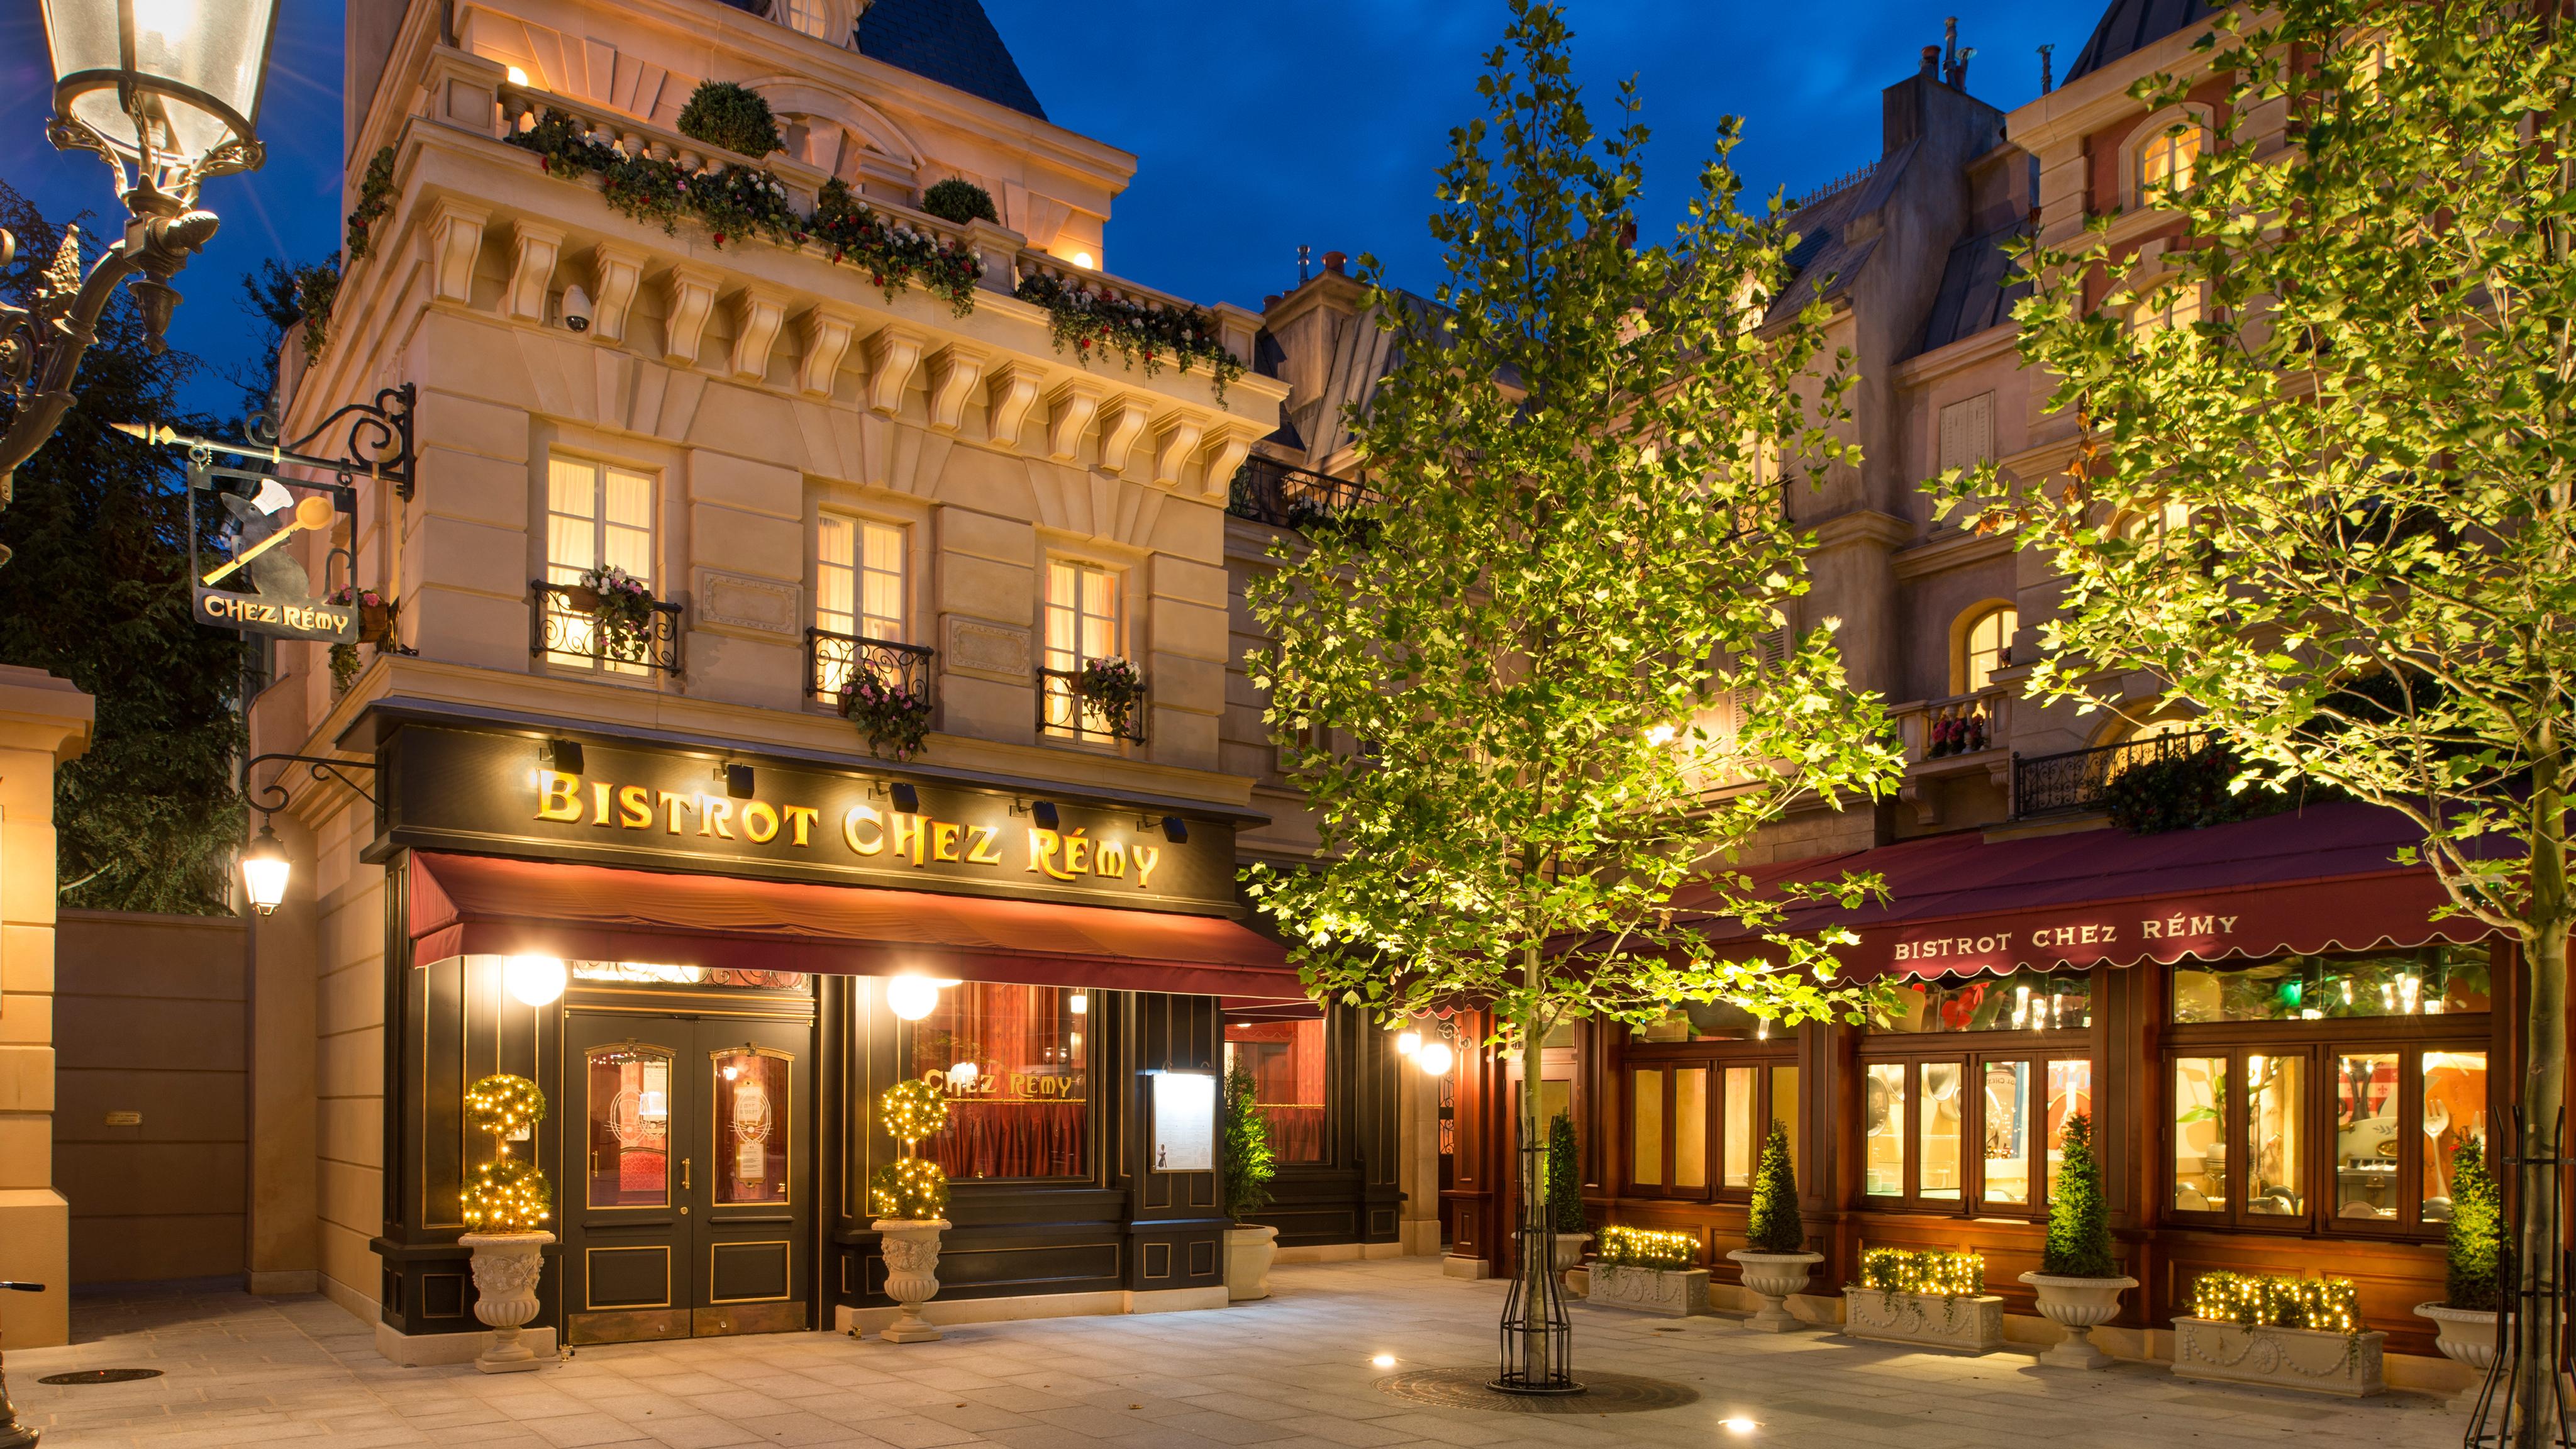 Bistrot Chez Rémy Bookings and menu Disneyland Paris